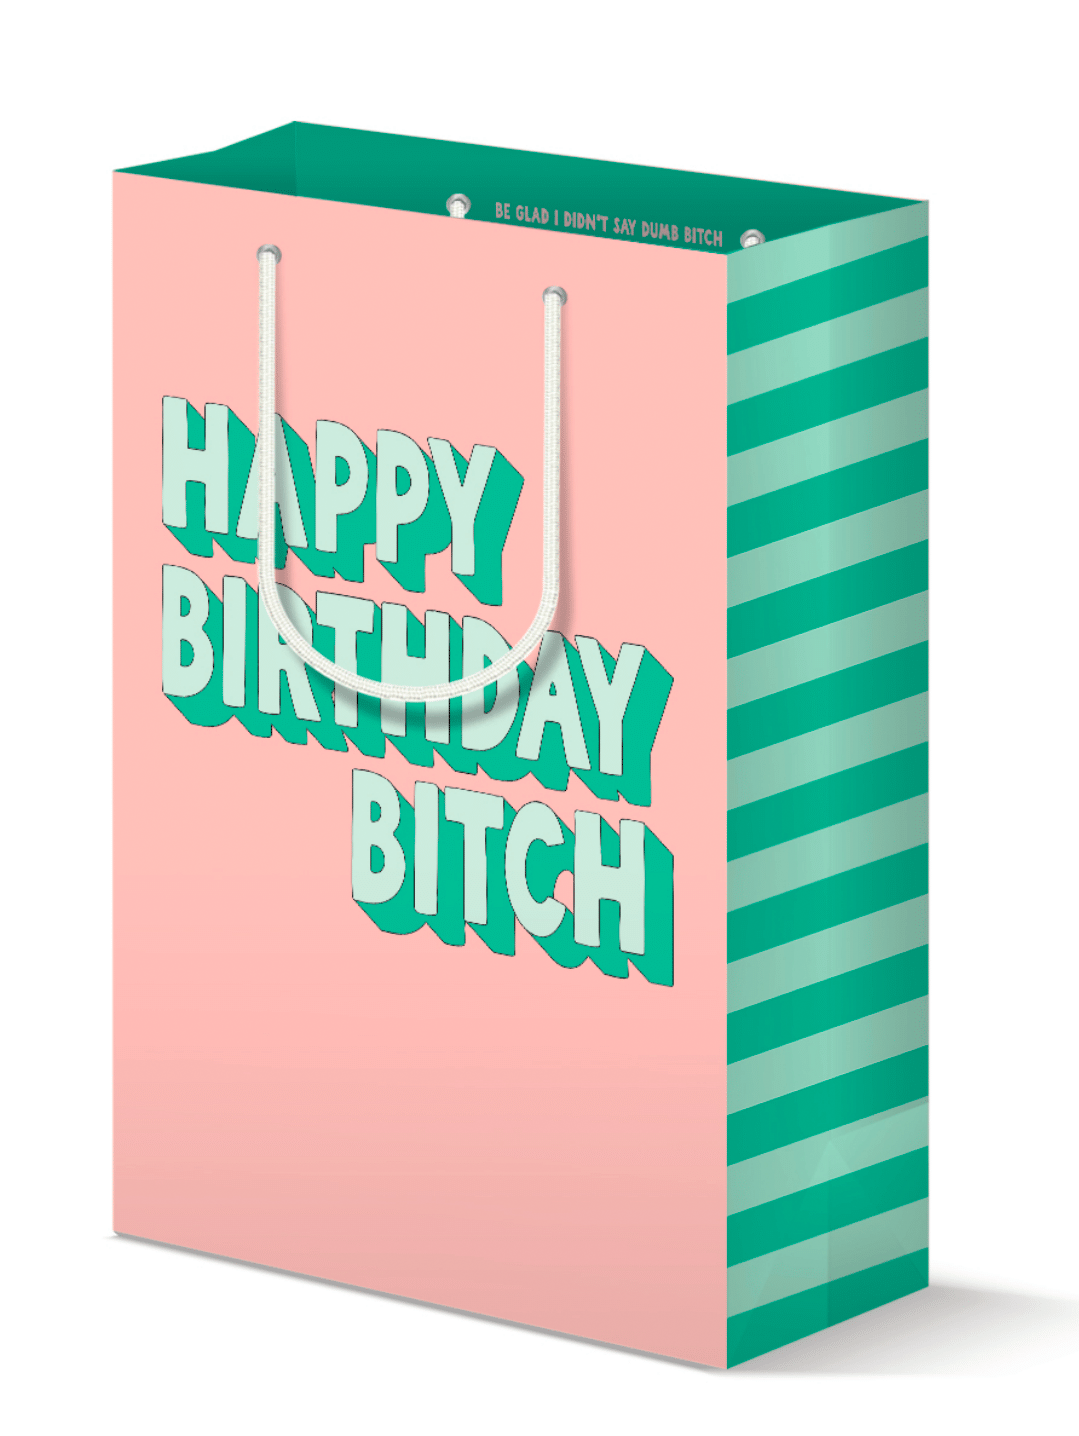 Happy Birthday Bitch - Gift Bag